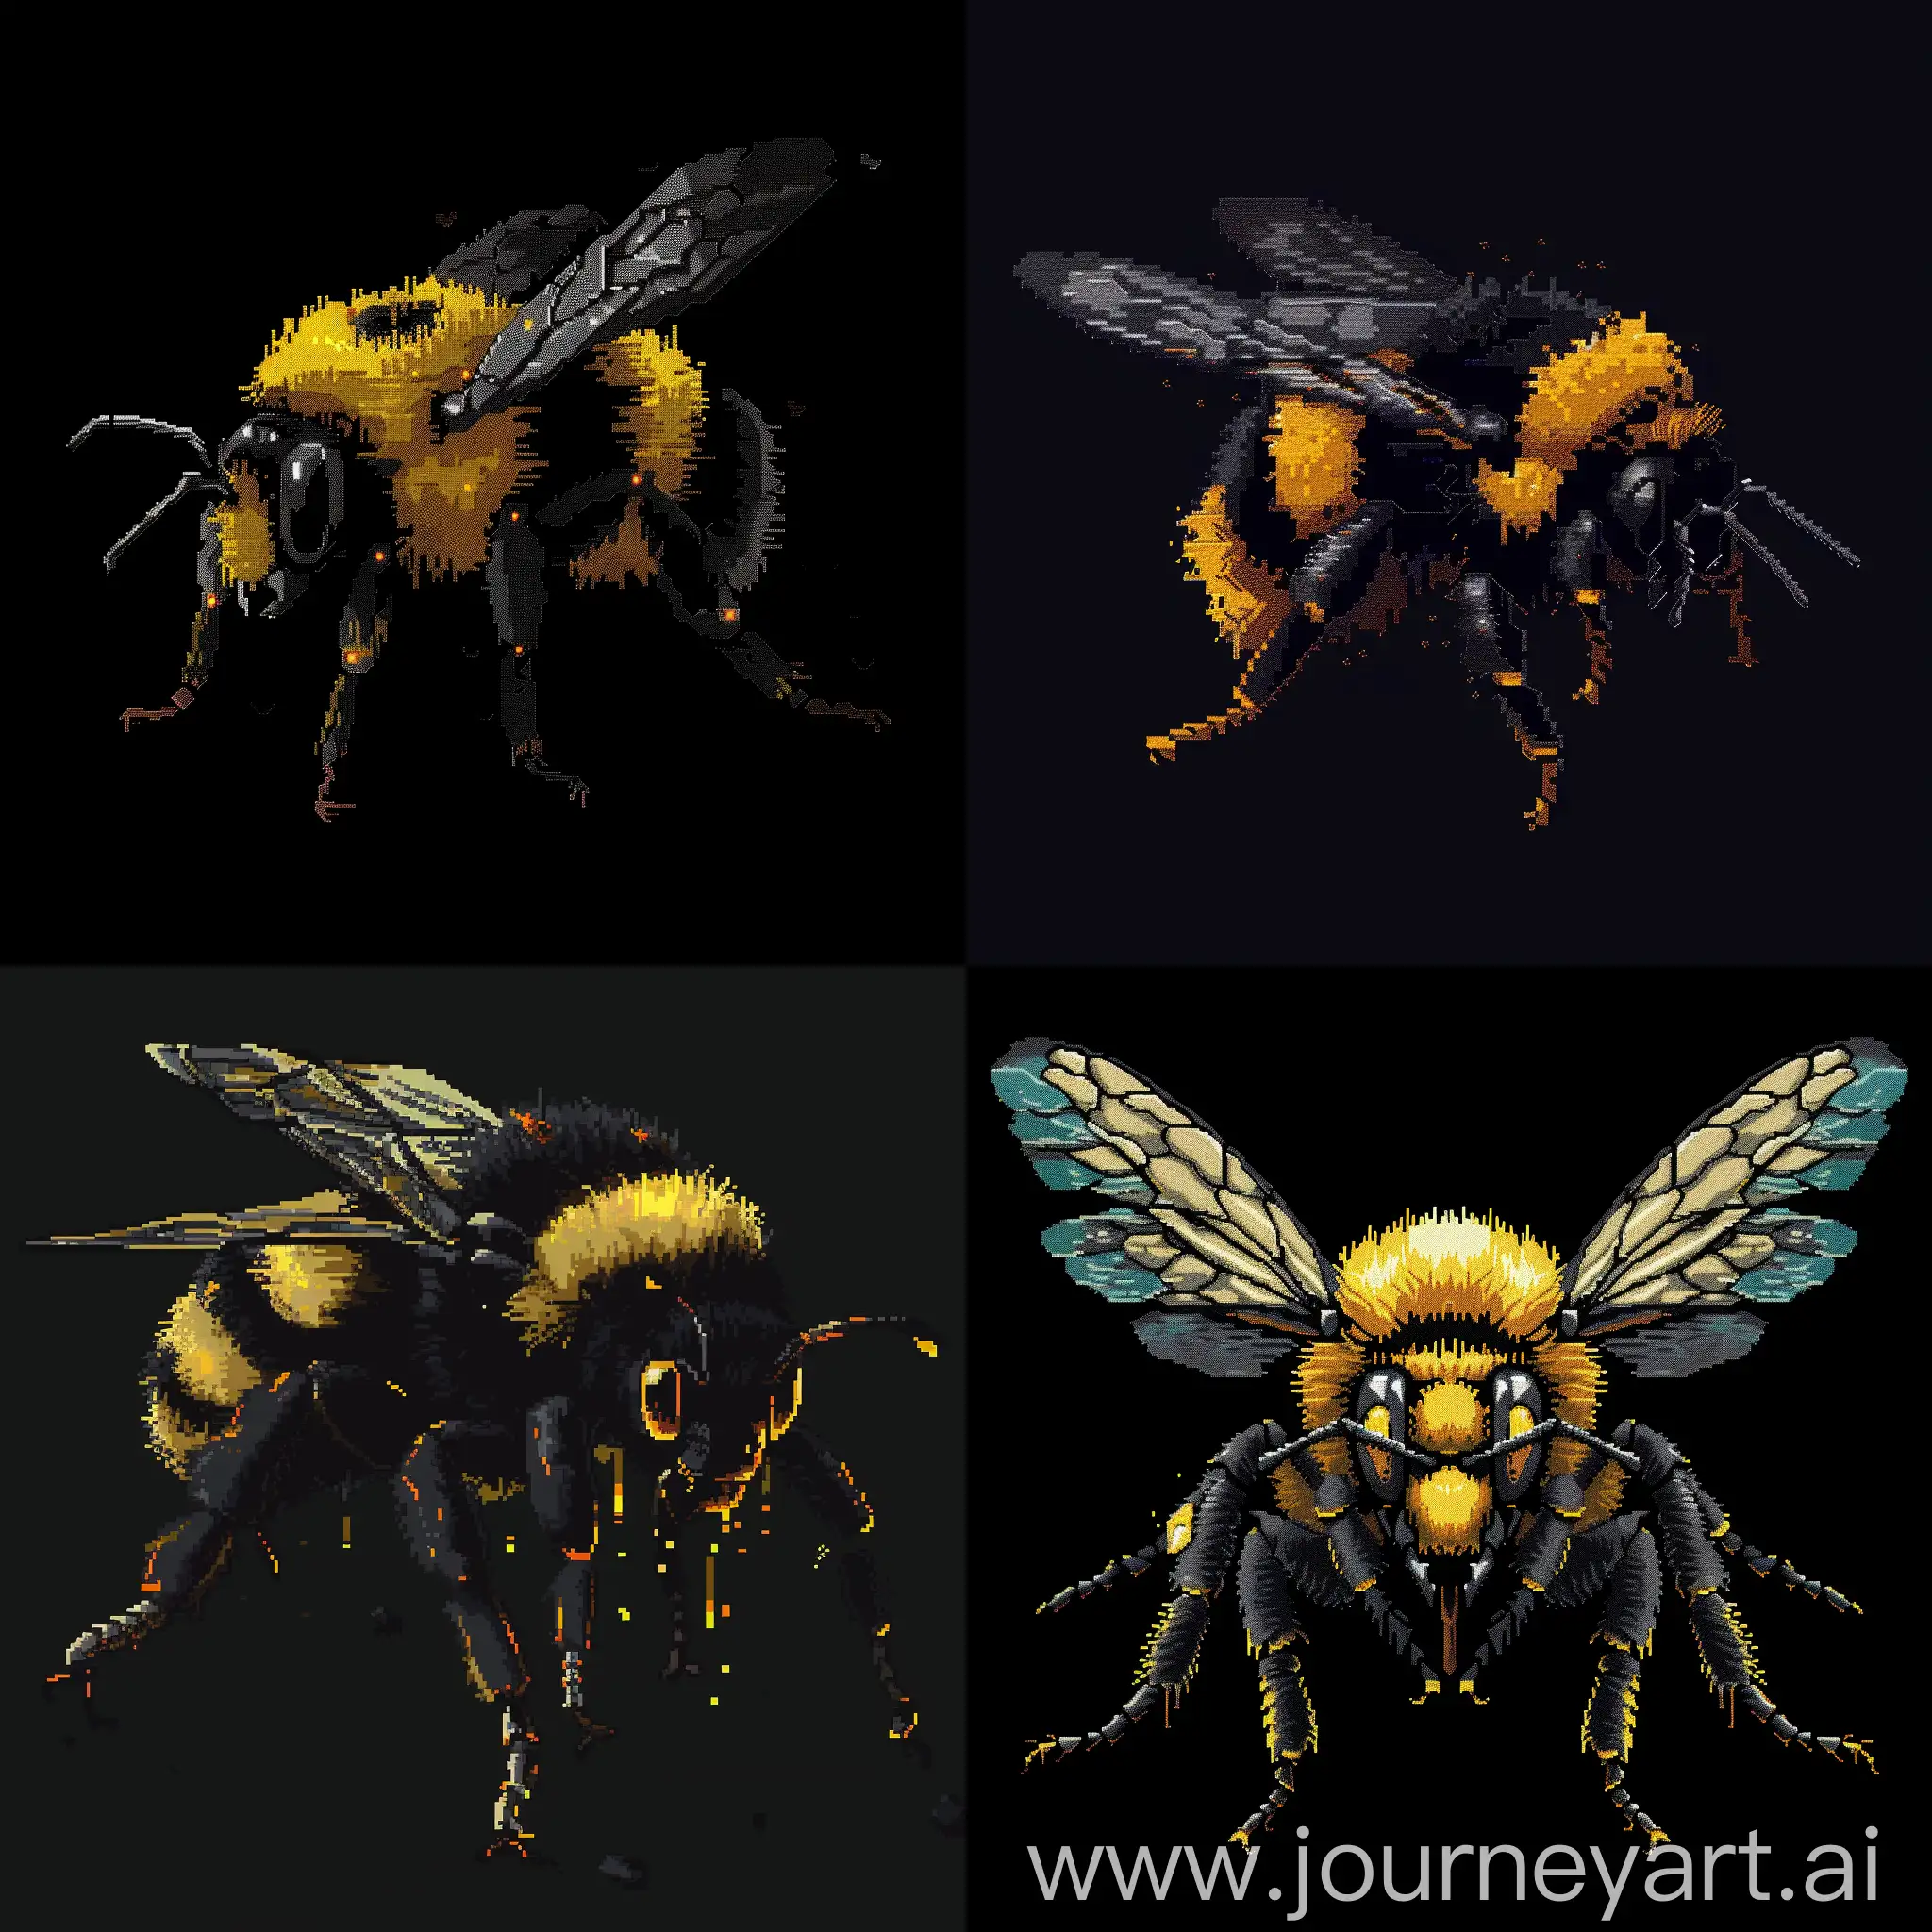  bumblebee pixel art, background all black, horror style